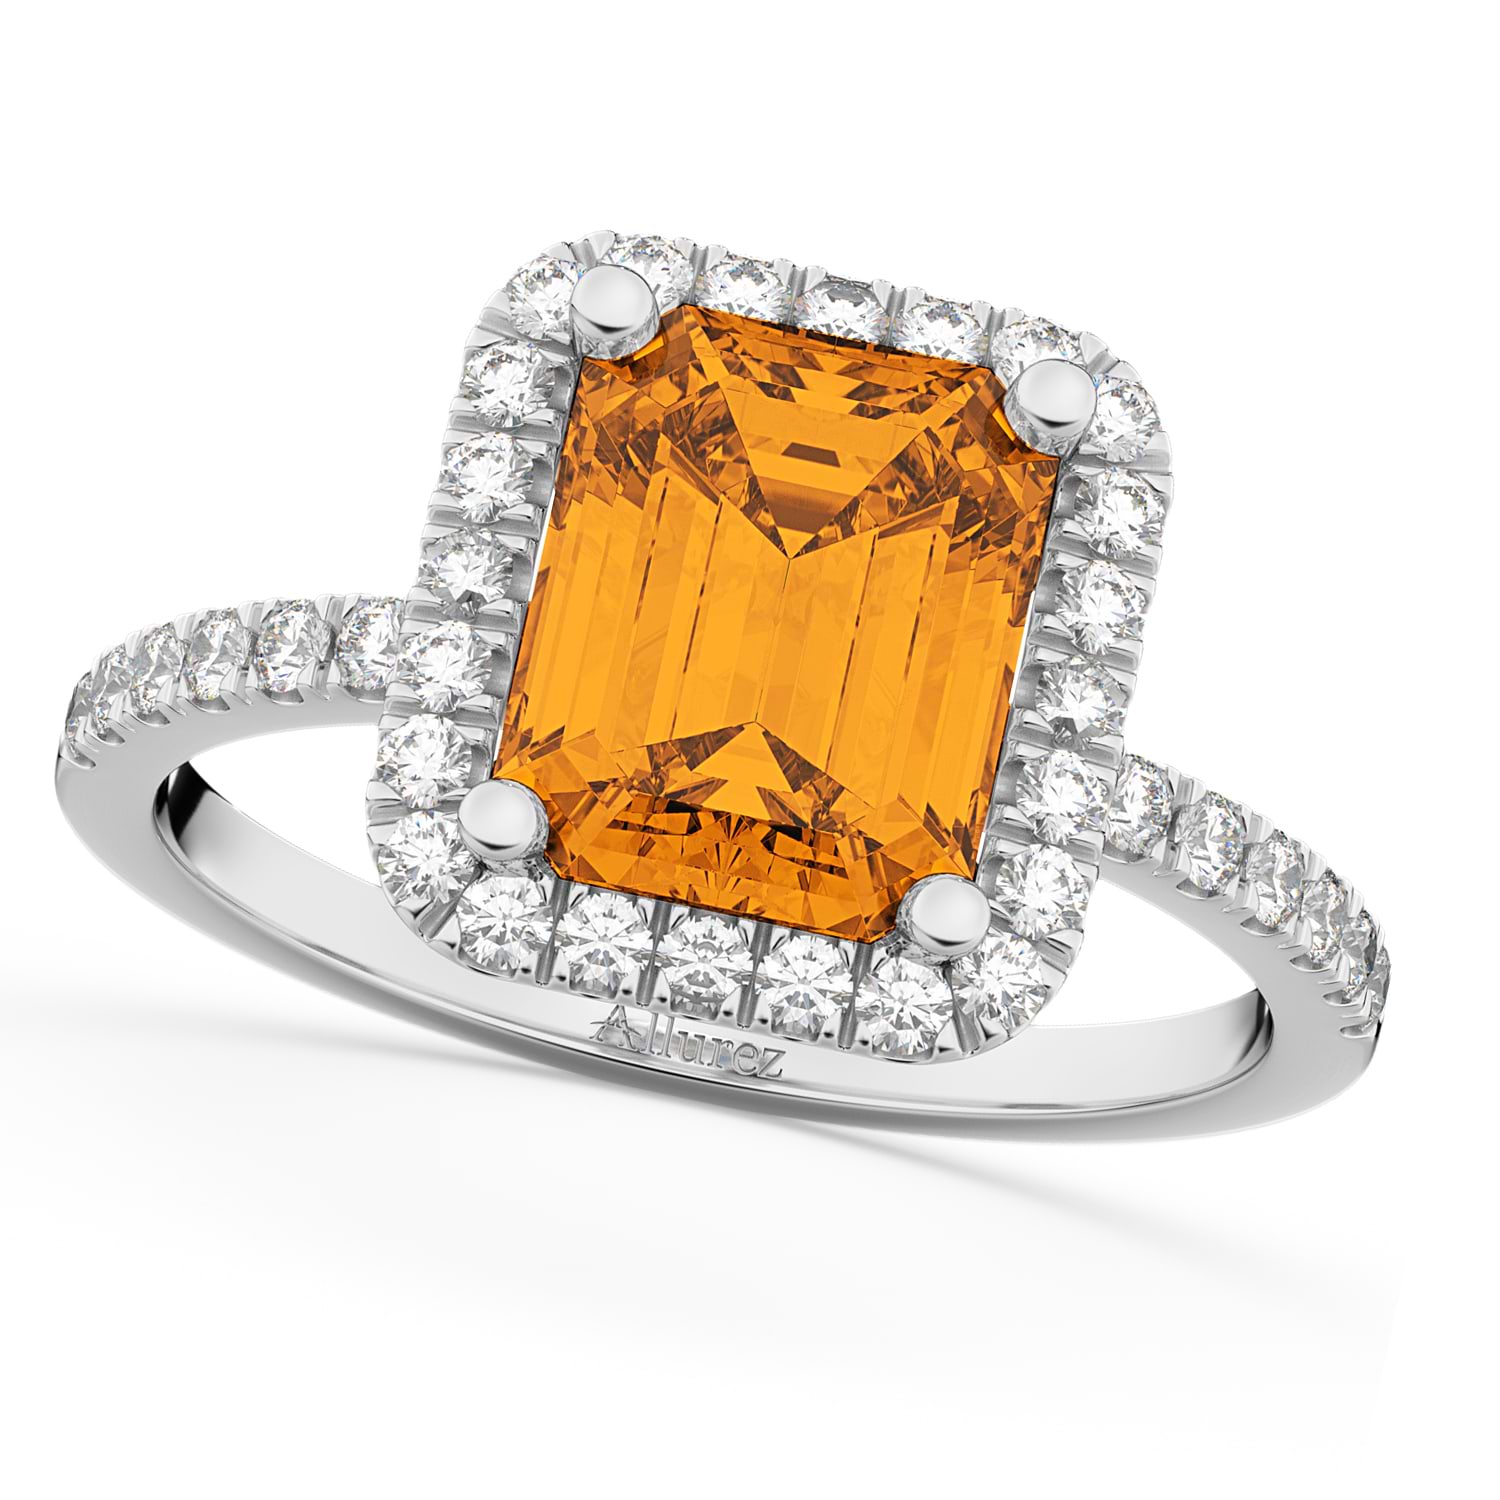 Emerald-Cut Citrine & Diamond Engagement Ring 18k White Gold (3.32ct)